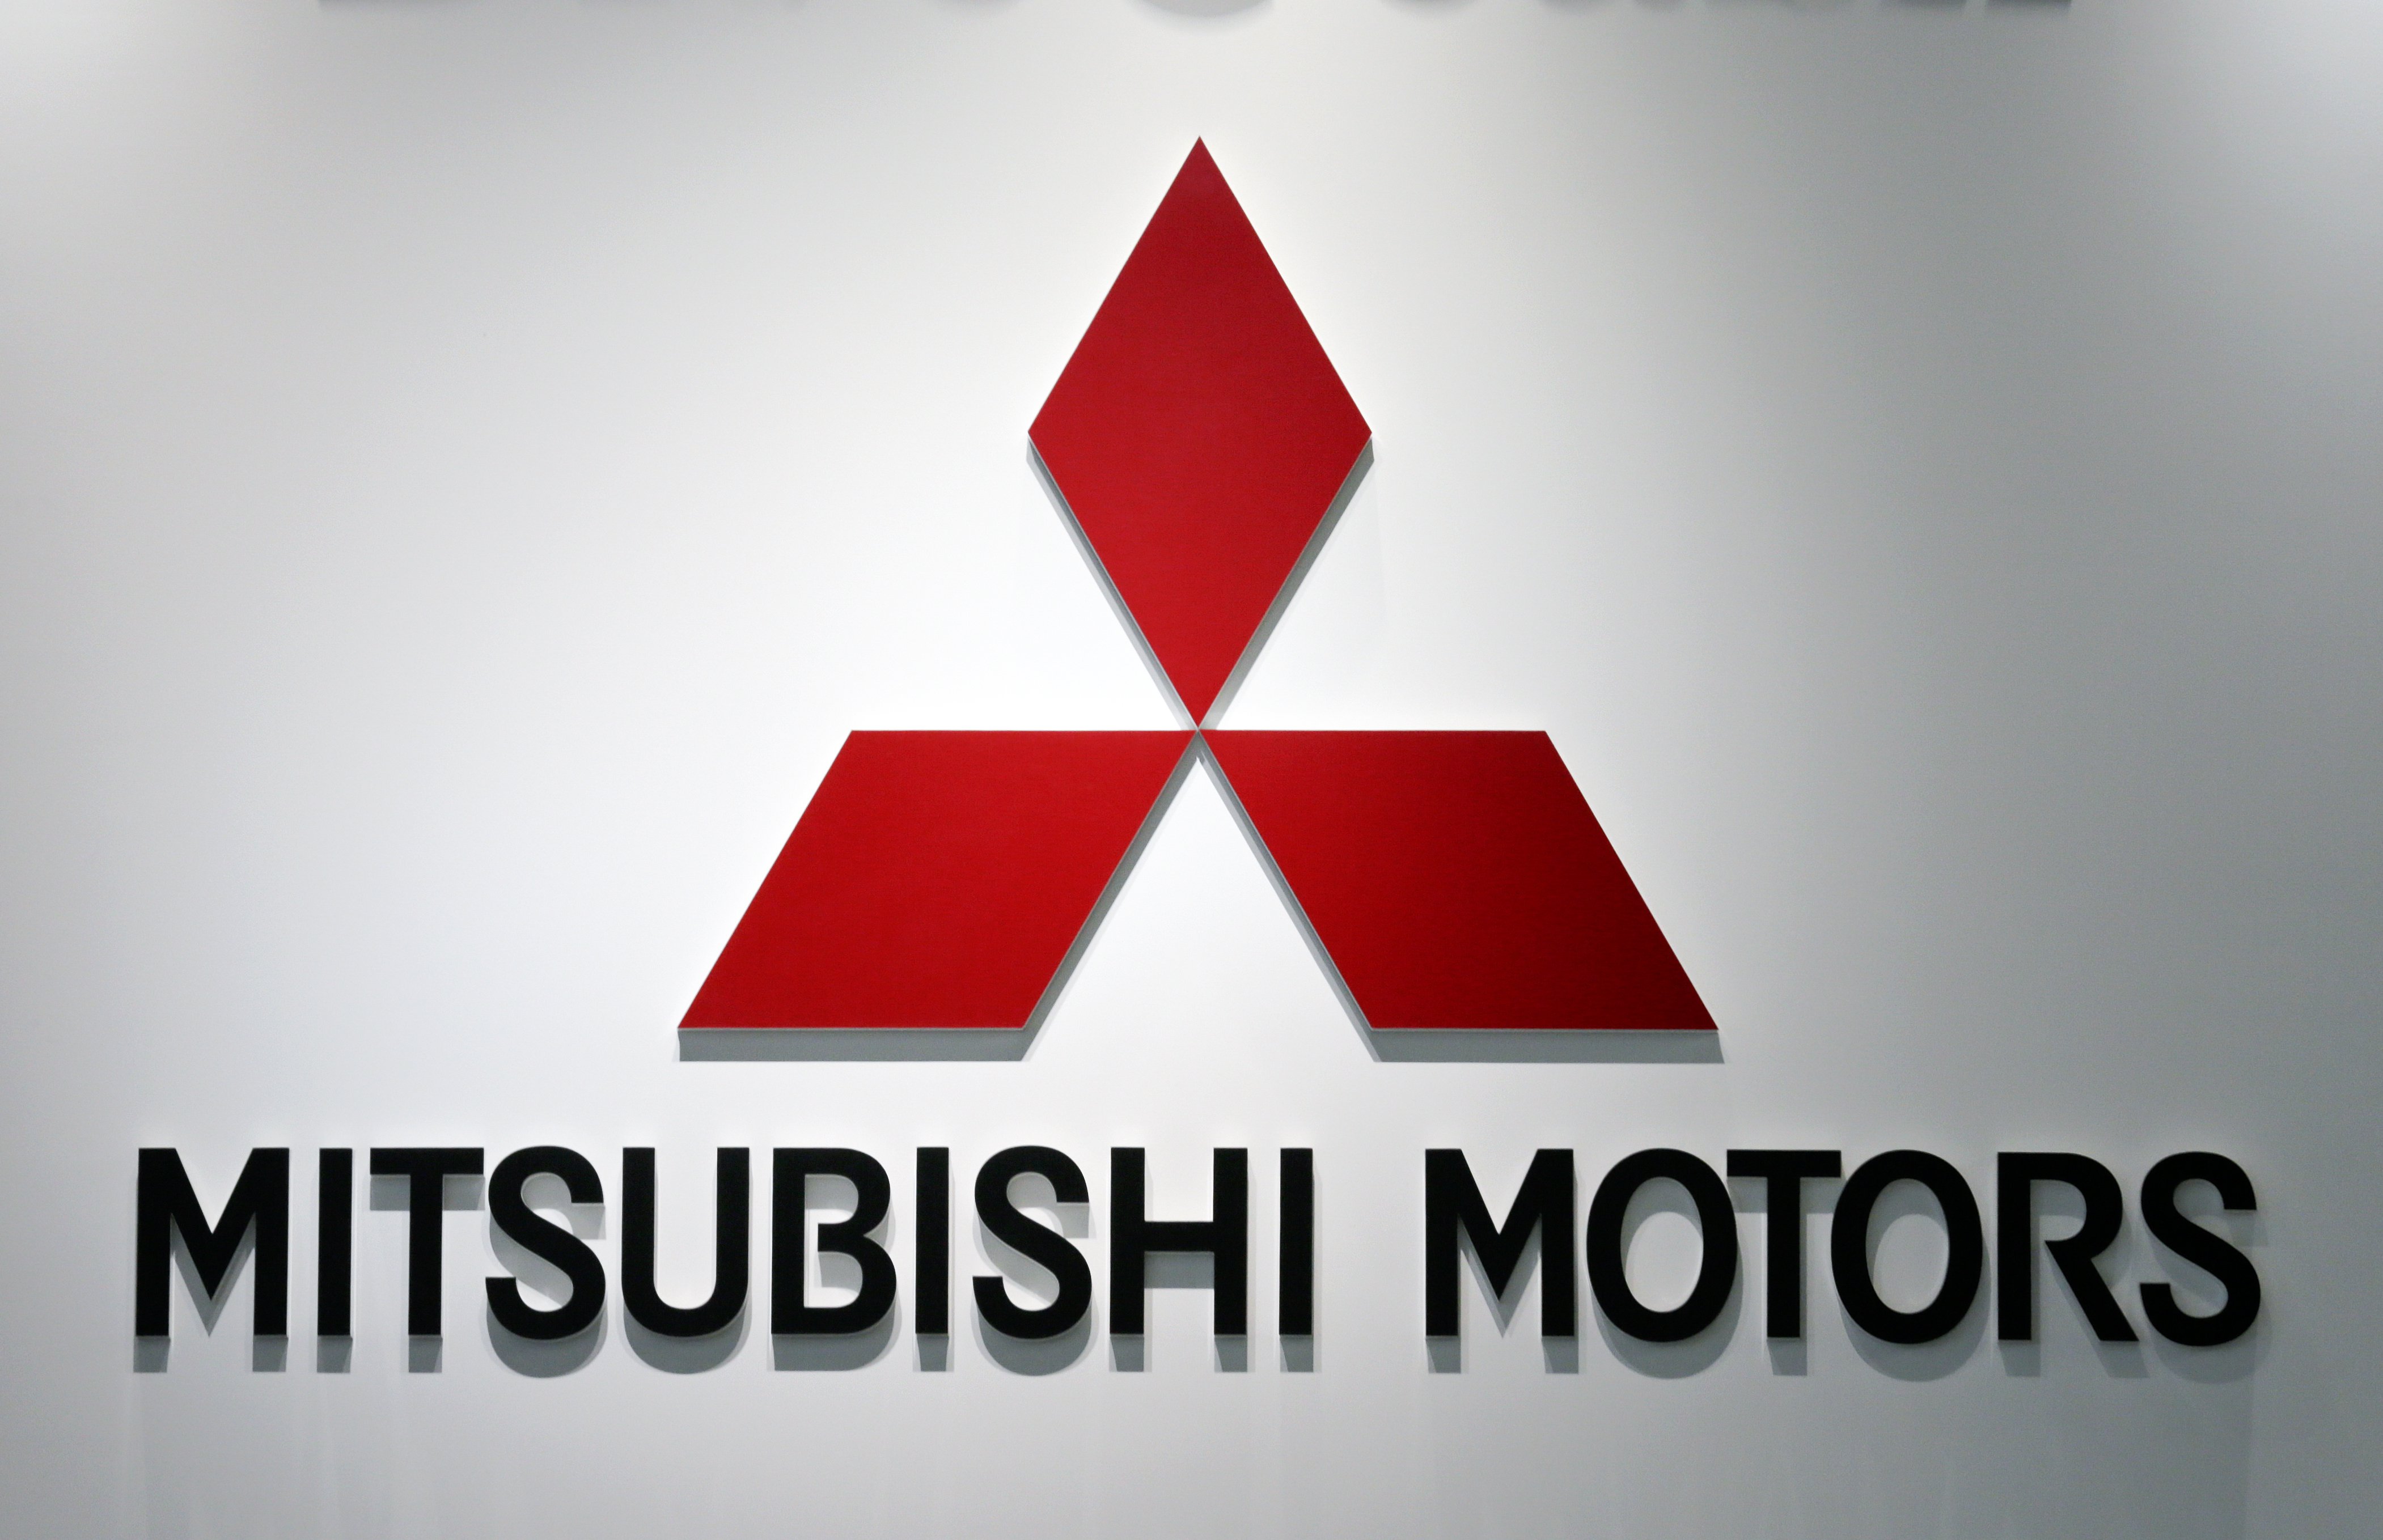 Производитель mitsubishi. Mitsubishi logo 2021. Mitsubishi значок Mitsubishi. Mitsubishi Motors Corporation logo. Mitsubishi Group автомобили Mitsubishi 2010 года.